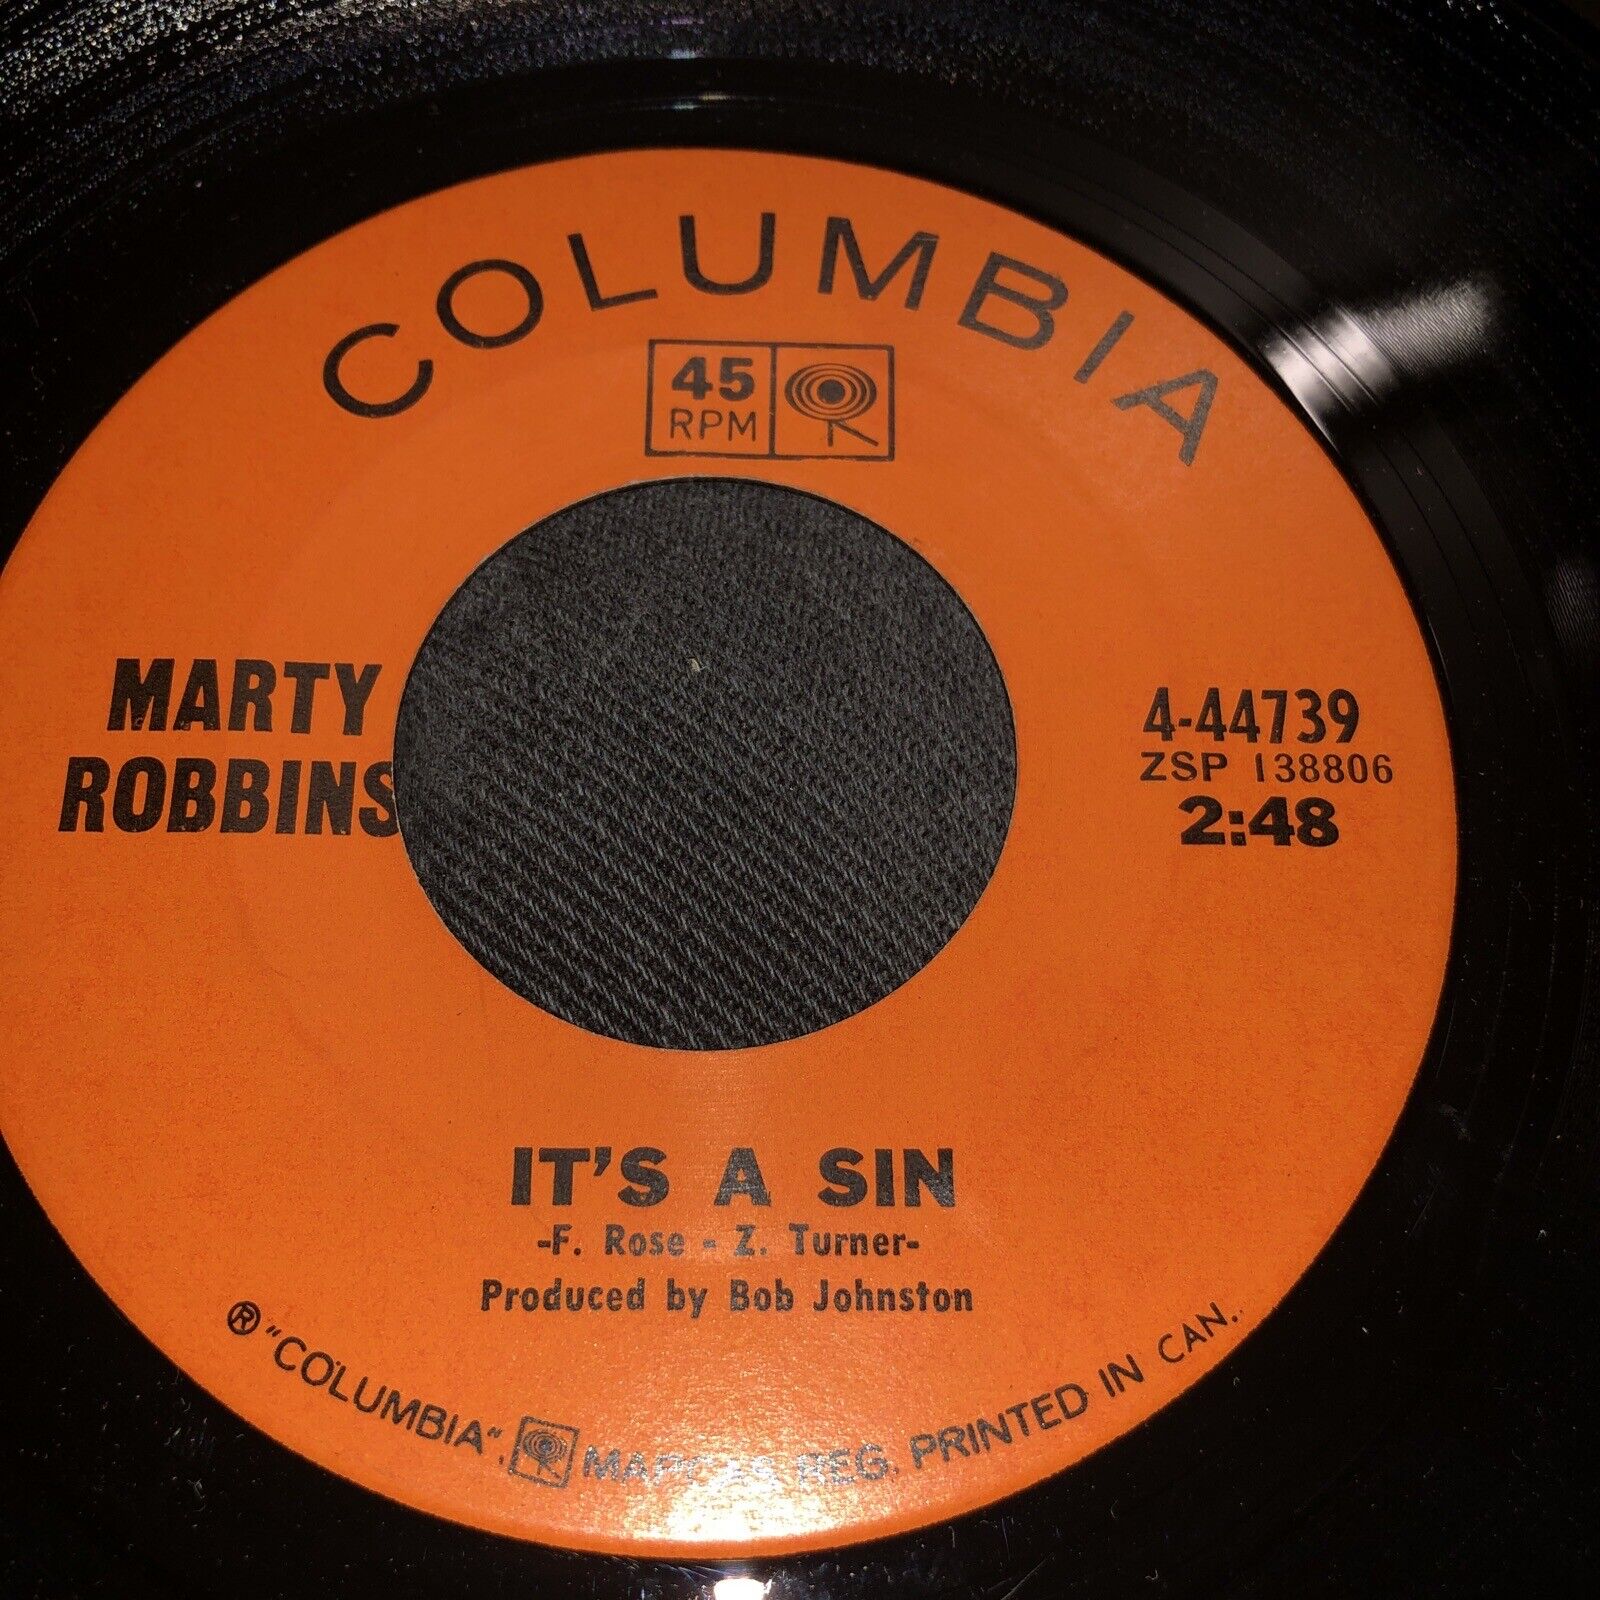 Marty Robbins Columbia records 45 RPM it’s a sin vinyl single 4a 